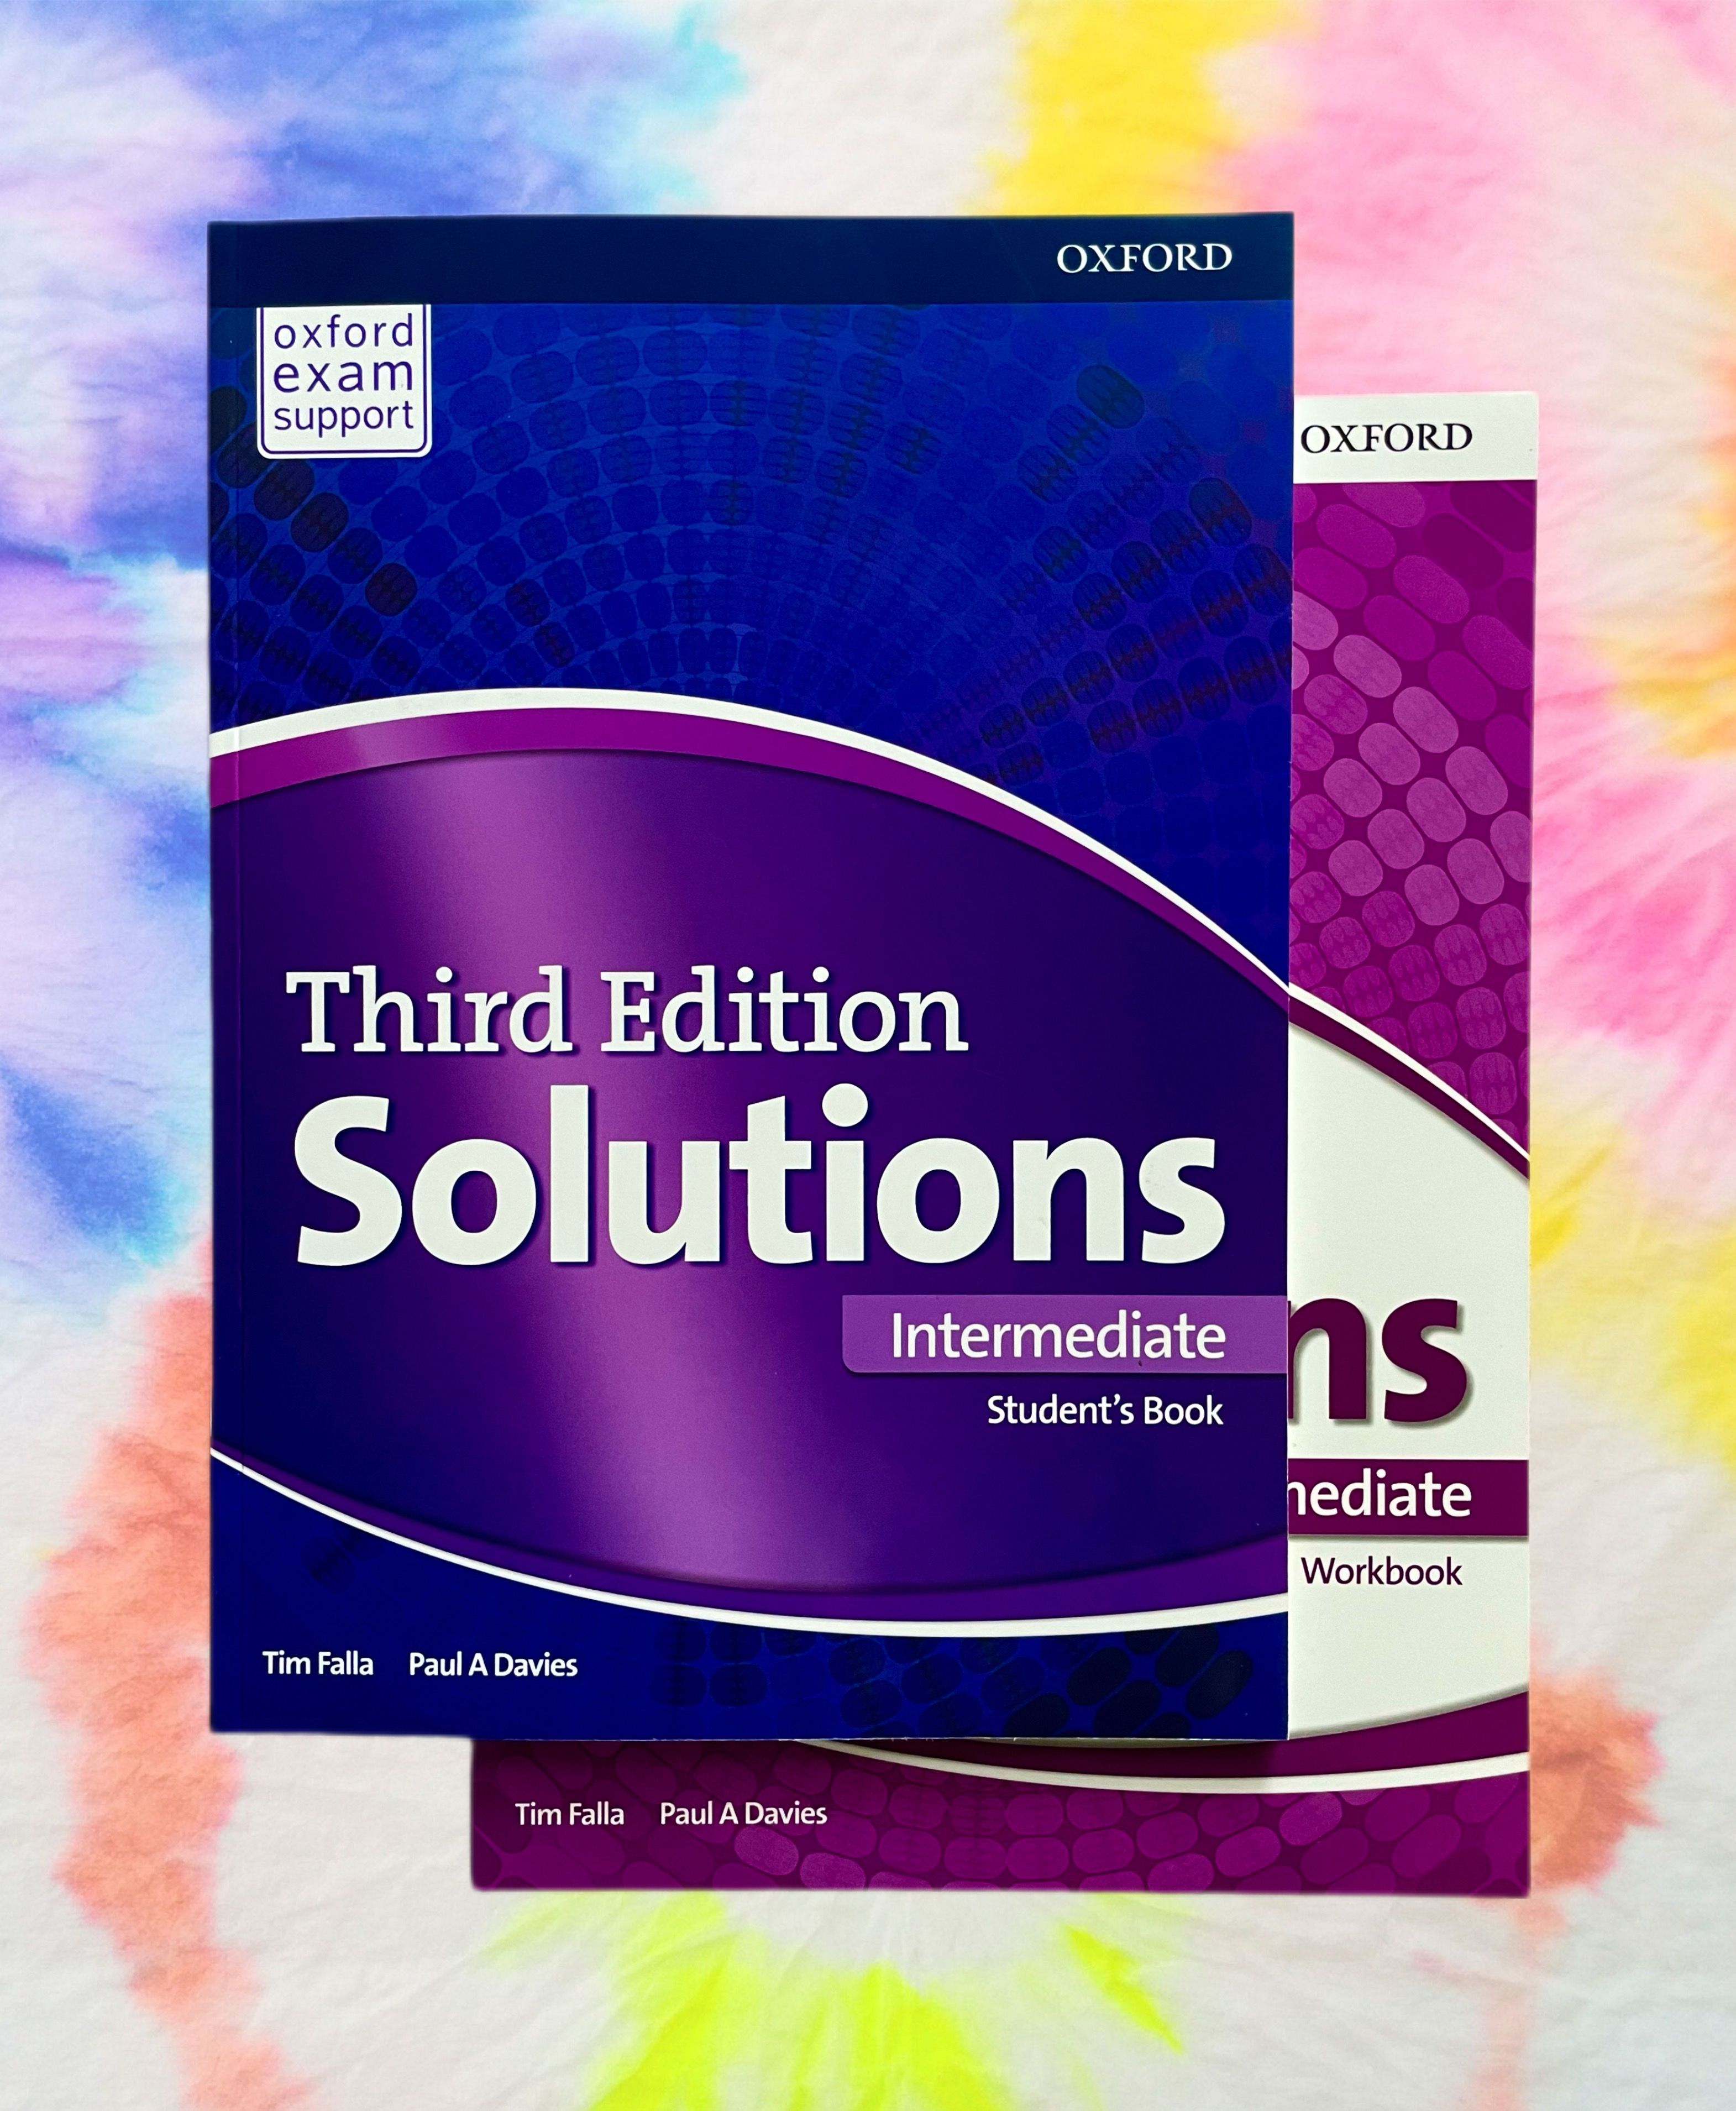 Solutions intermediate student s book ответы. Solutions Intermediate student's book. Solutions Intermediate 3rd Edition. Third Edition solutions Intermediate student's book. Workbook.